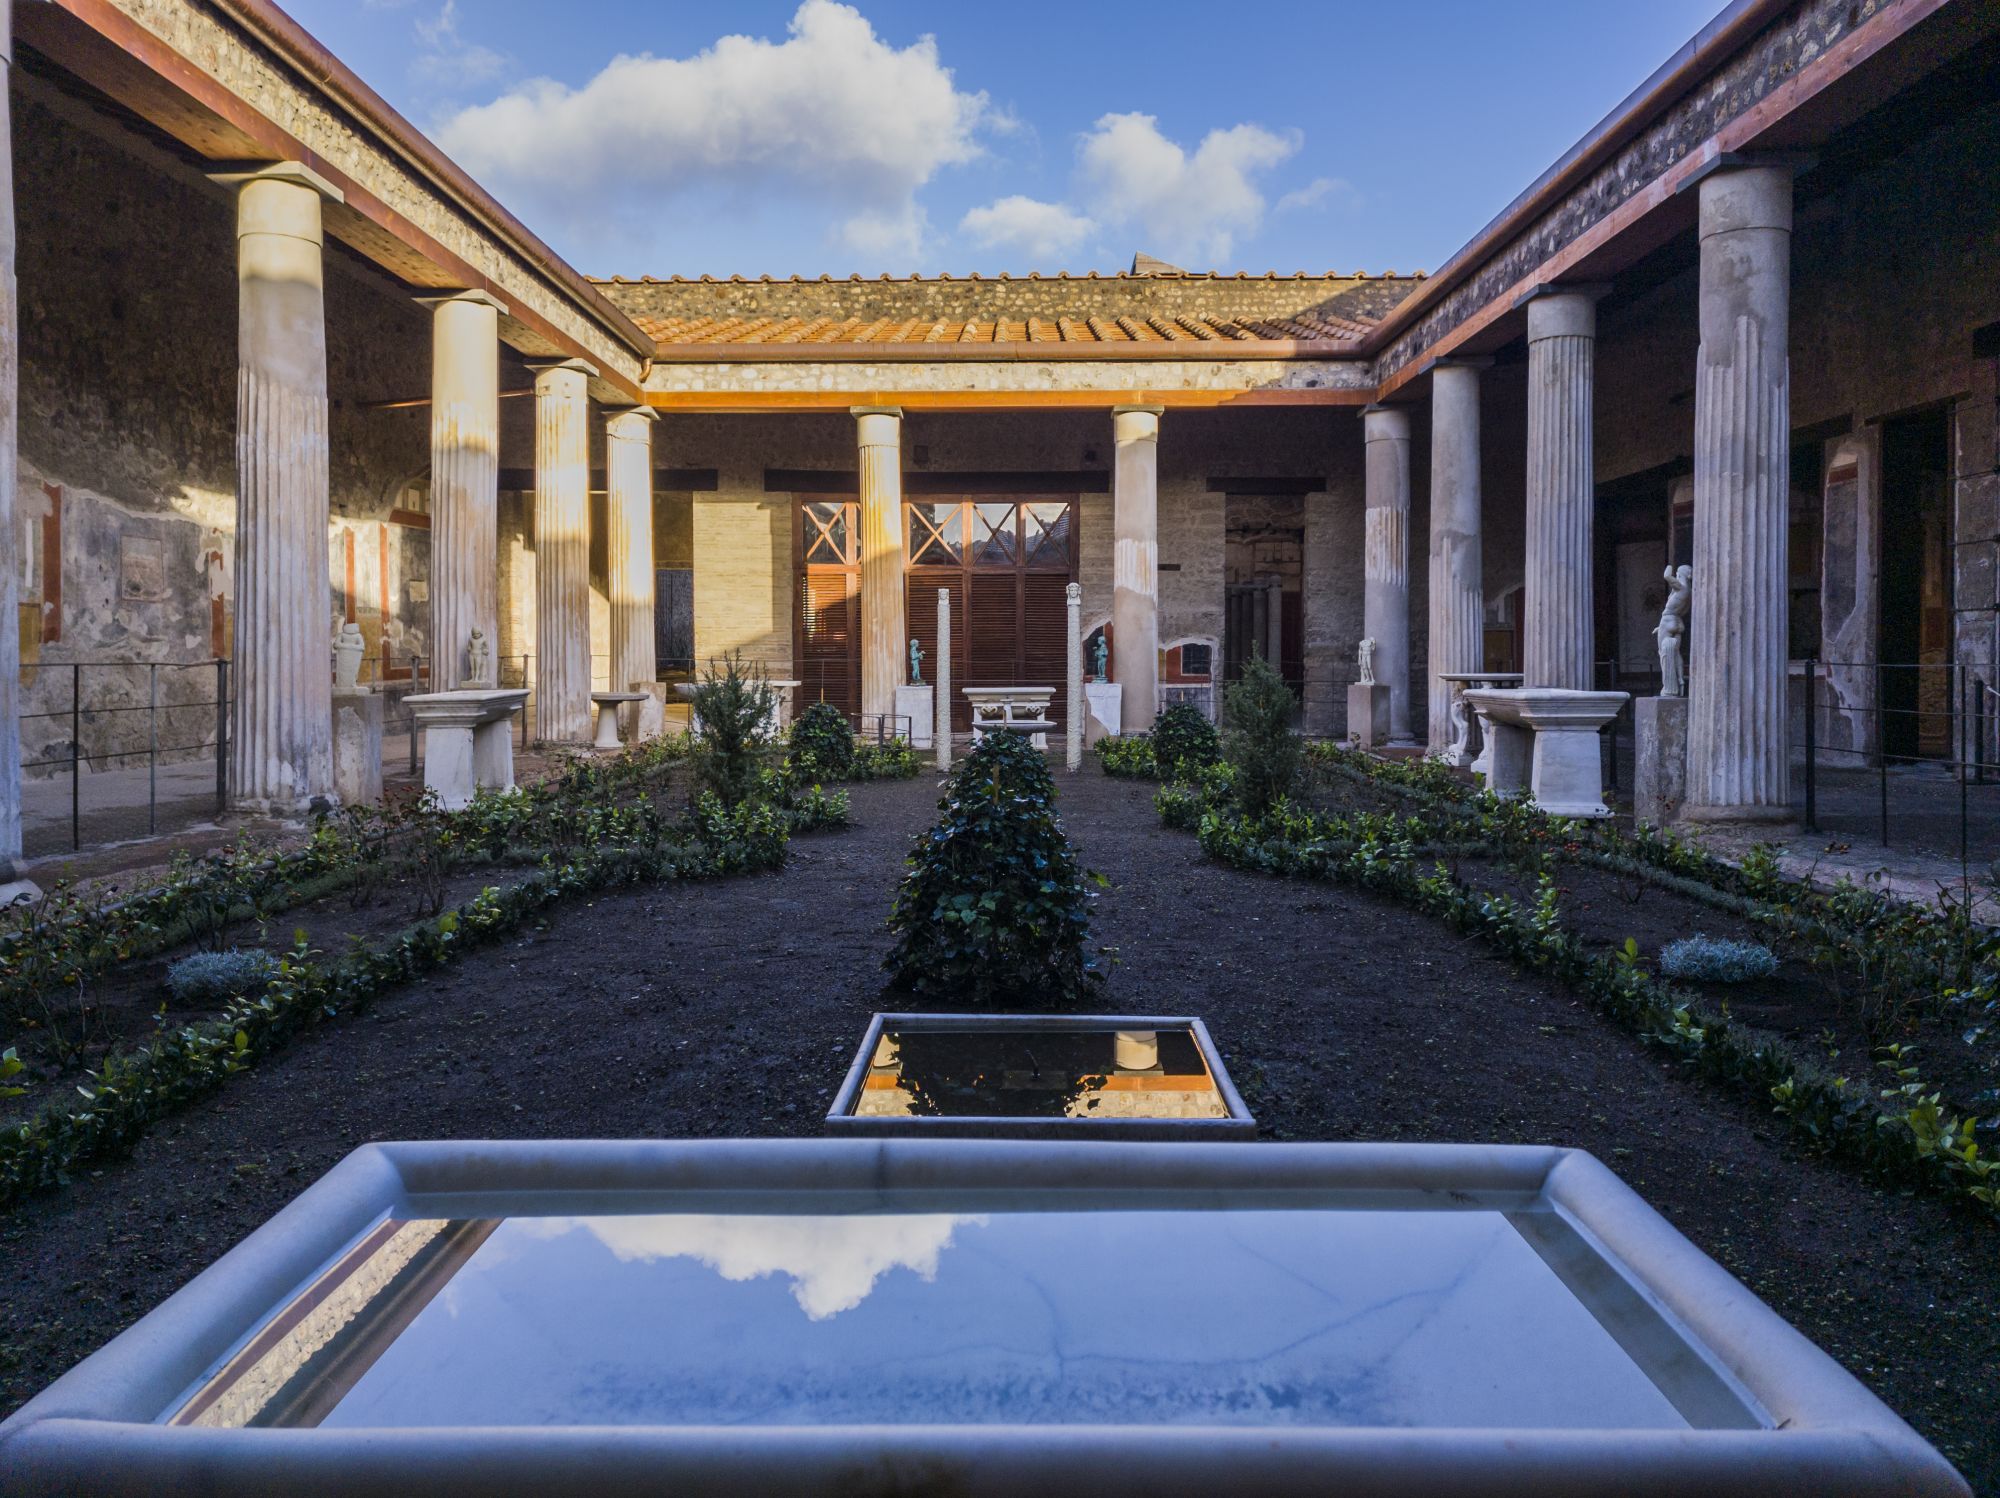 01 pompeii heritage site